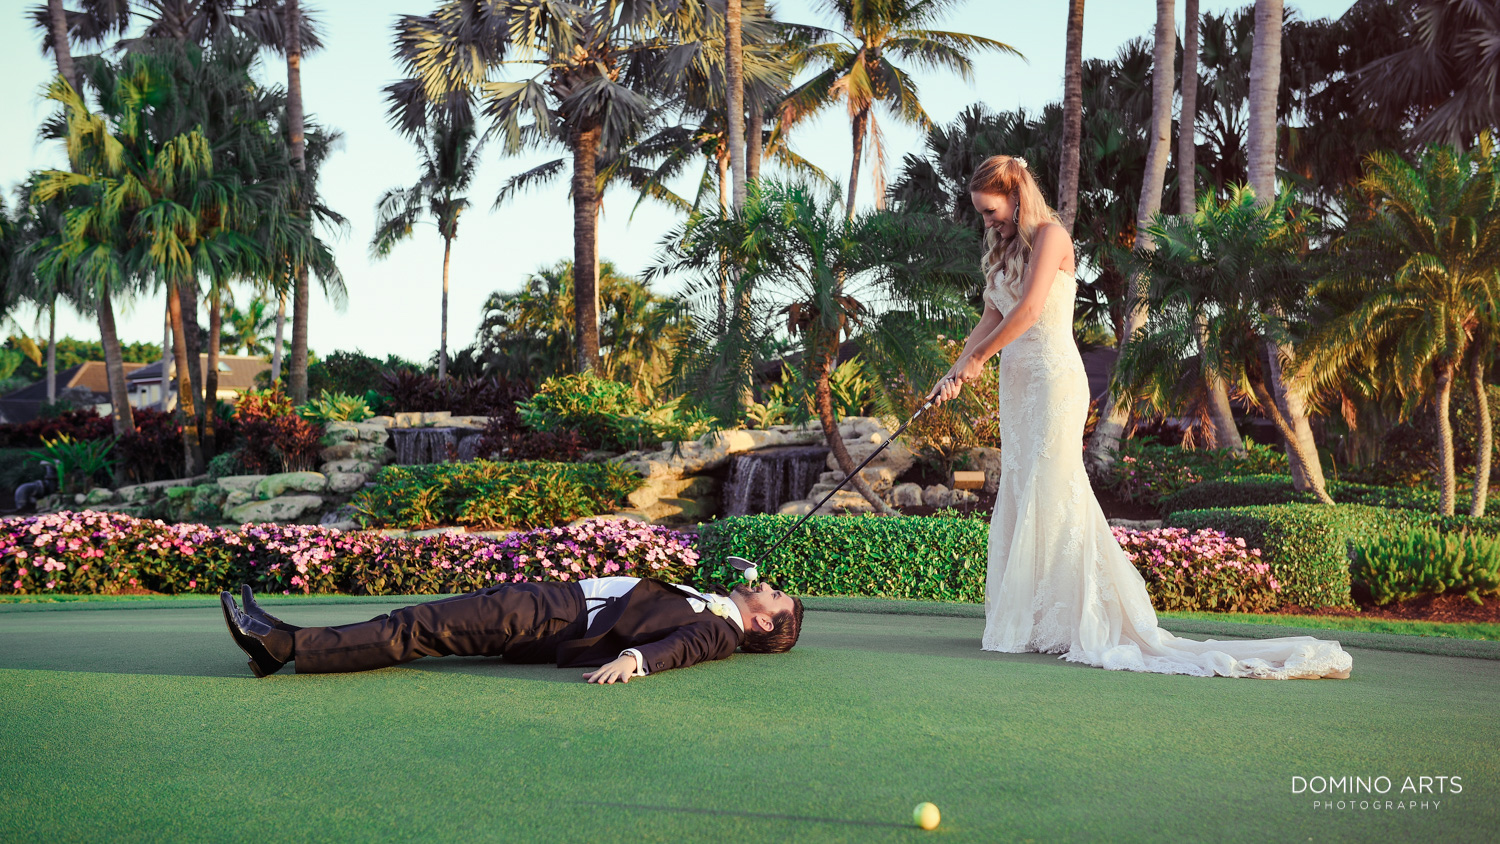 Luxury lifestyle wedding photography at The Polo Club, Boca Raton, Florida